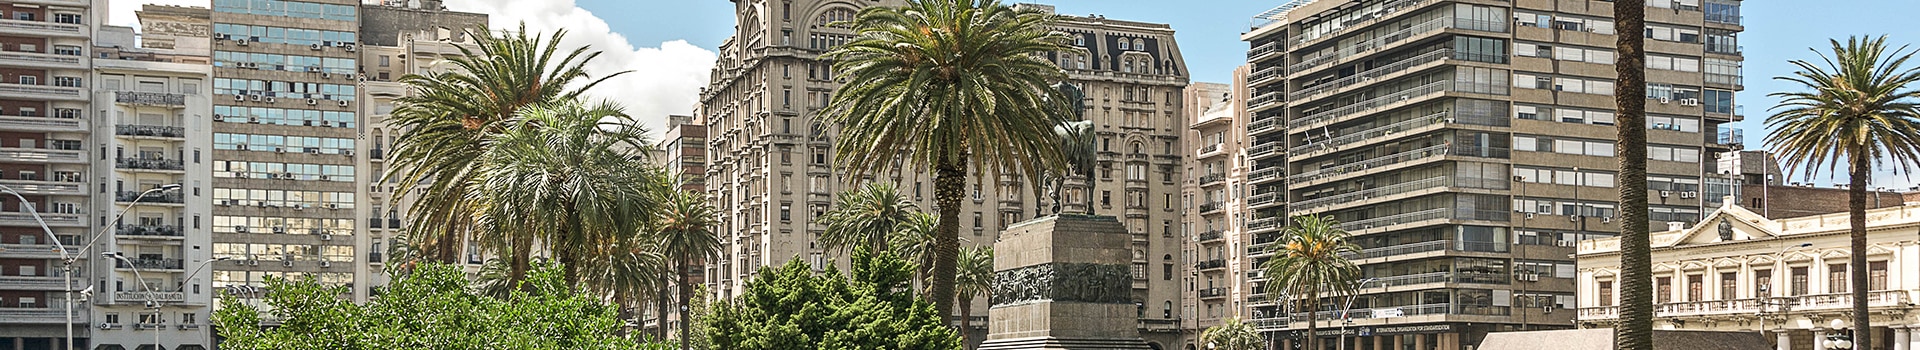 Málaga - Montevideo